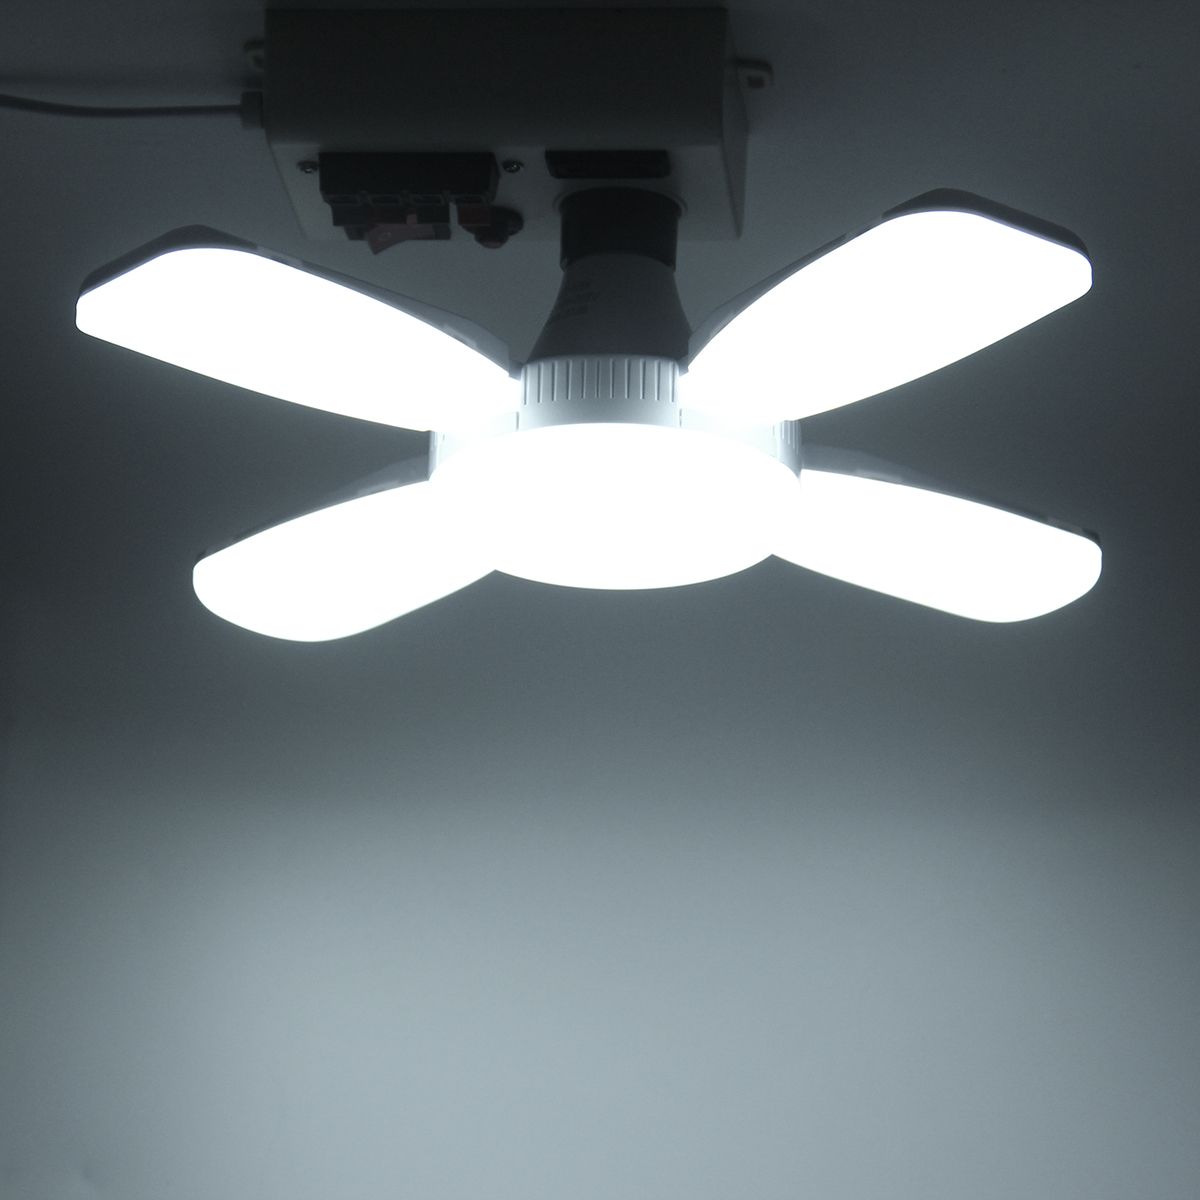 E27-60W-LED-Garage-Light-Bulb2835SMD-Four-Leaves-Deformable-Ceiling-Workshop-Lamp-AC165-265V-1719697